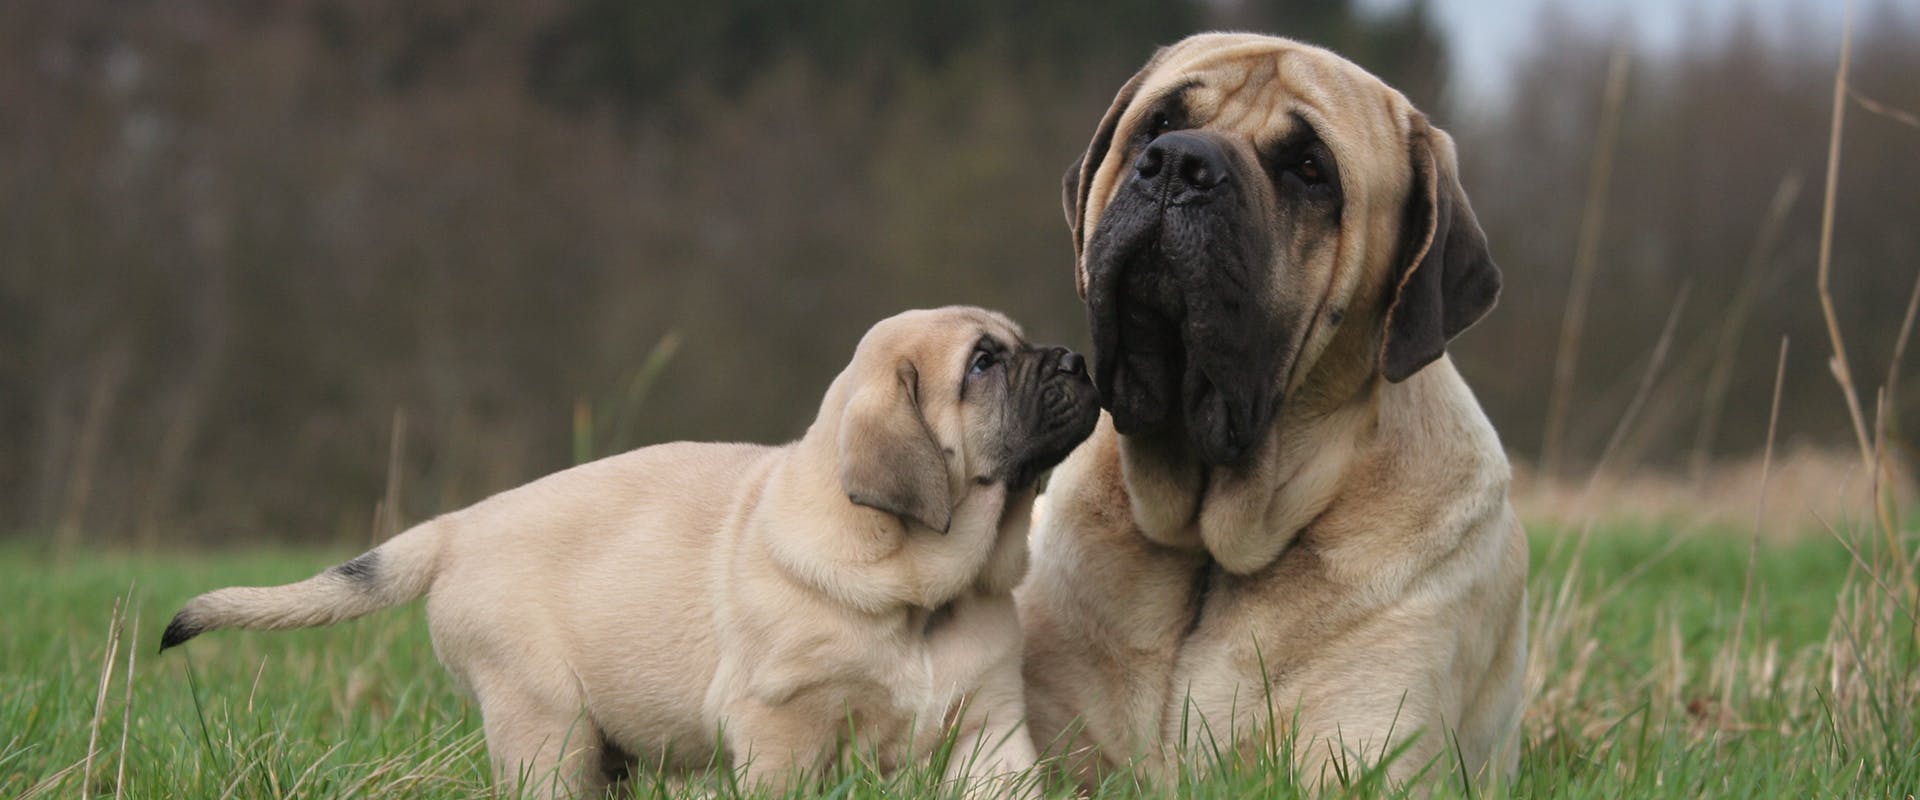 An adult Mastiff dog and a Mastiff puppy sitting in grass